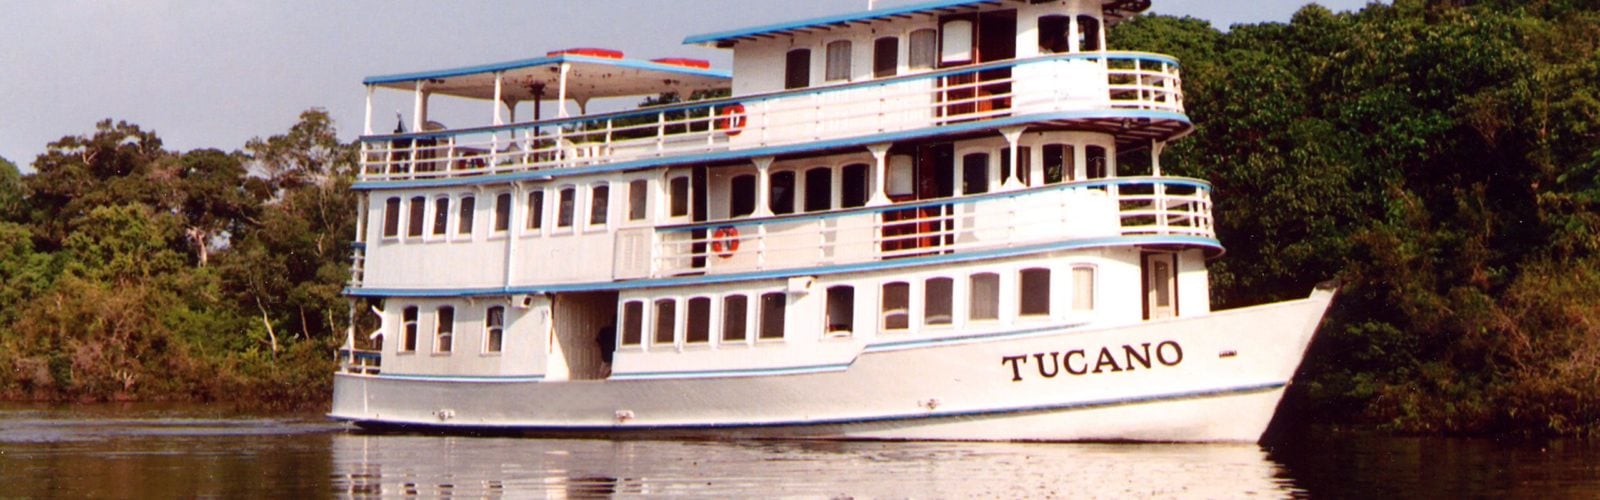 mv-tucano-ship-amazon